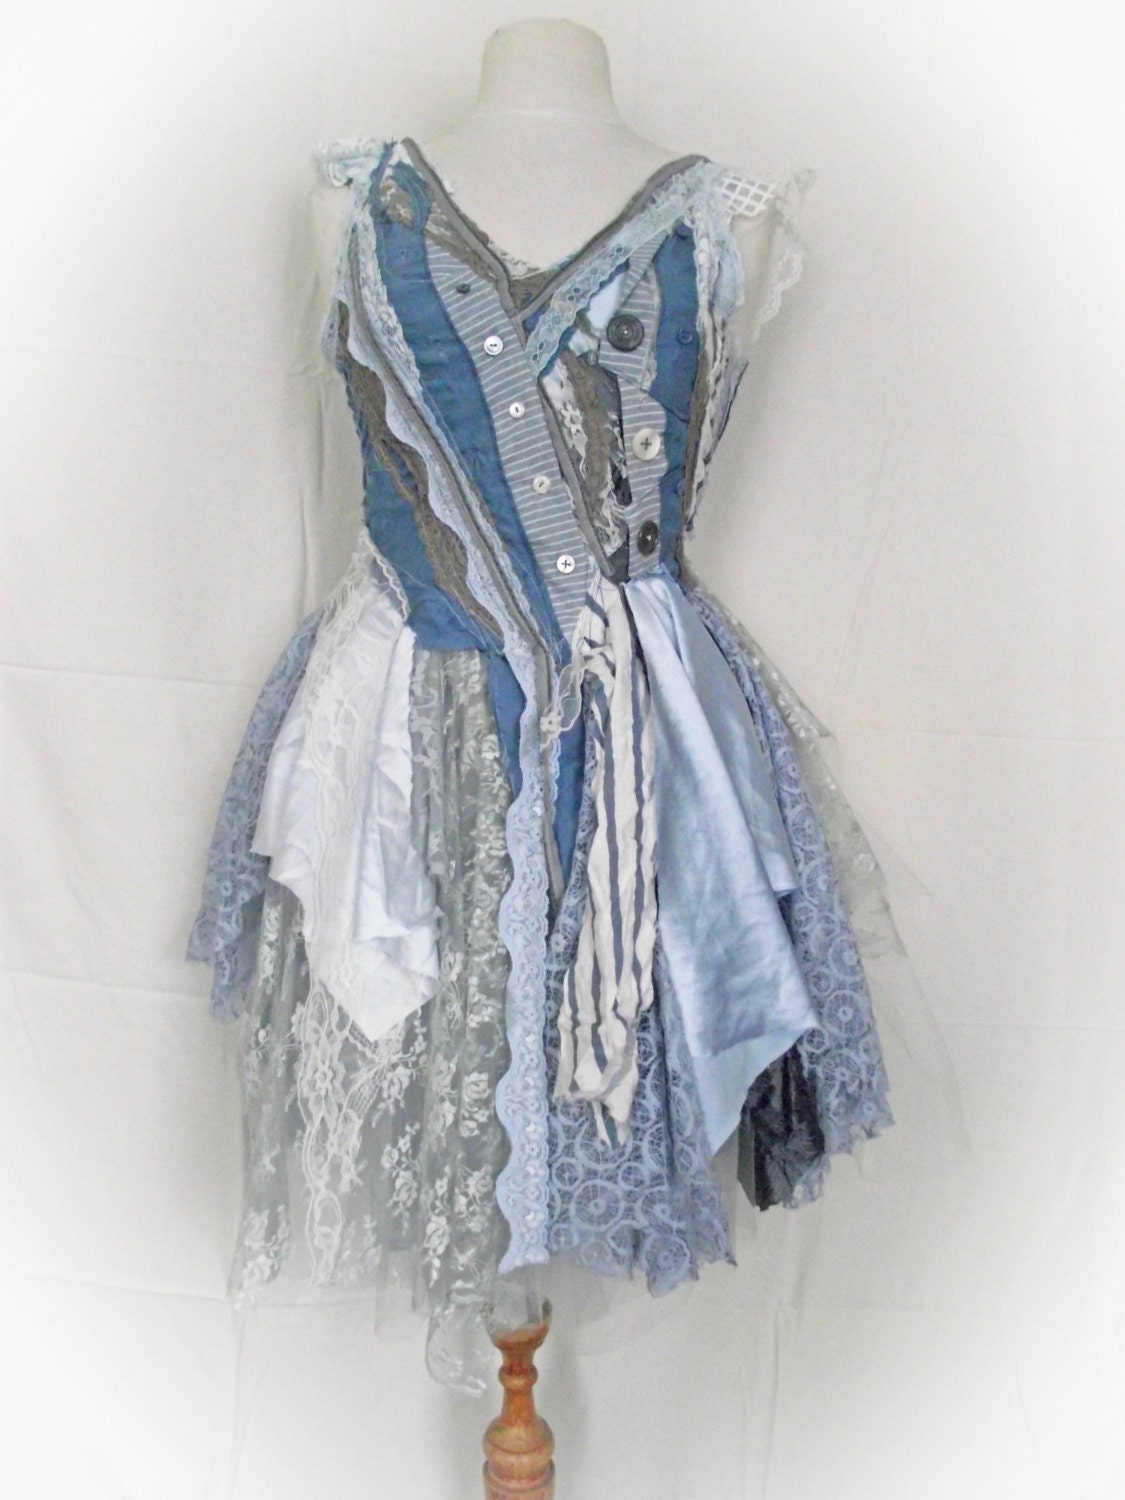 The Alice dress